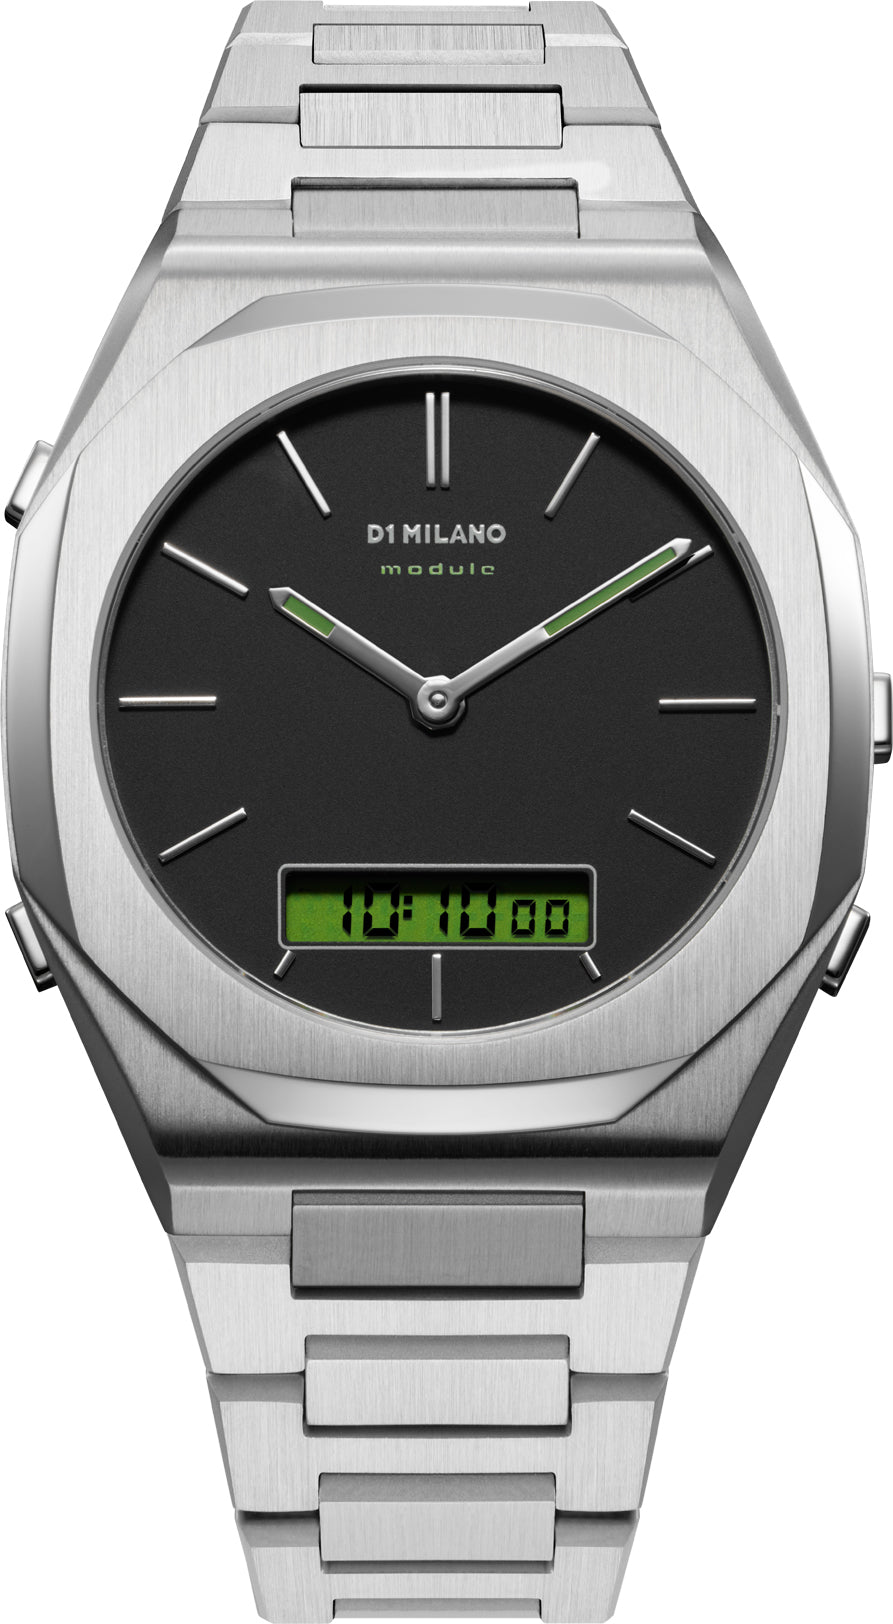 Photos - Wrist Watch Milano D1  Watch Module 366 - Black DLM-096 